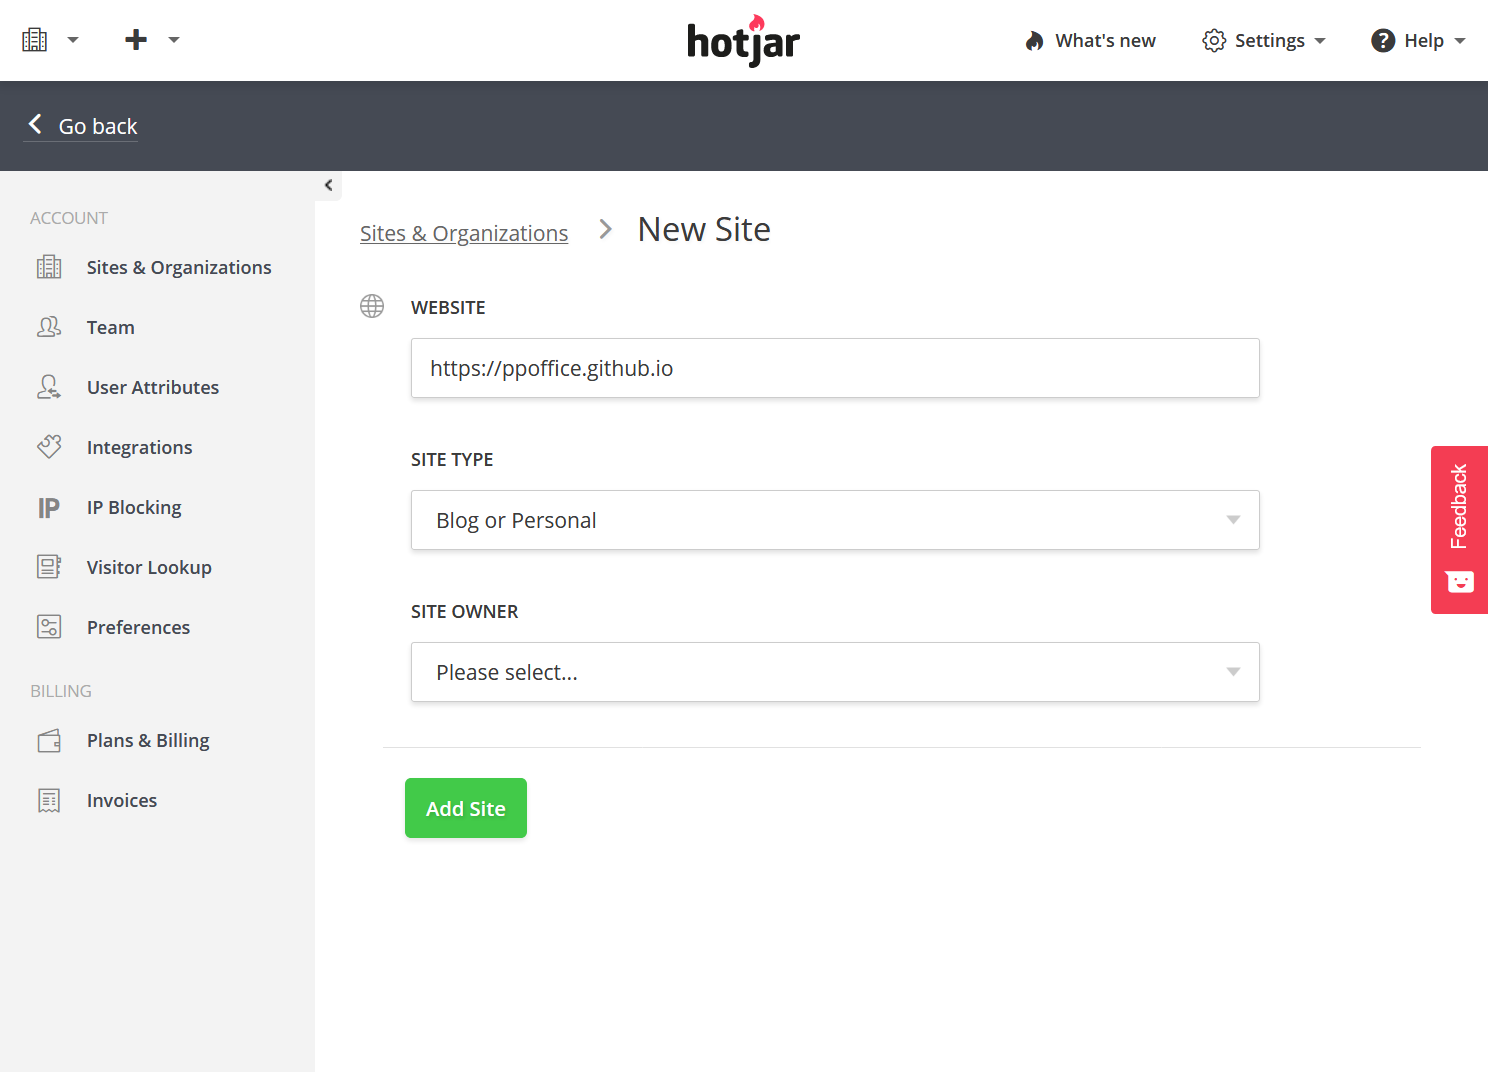 New Site - Hotjar